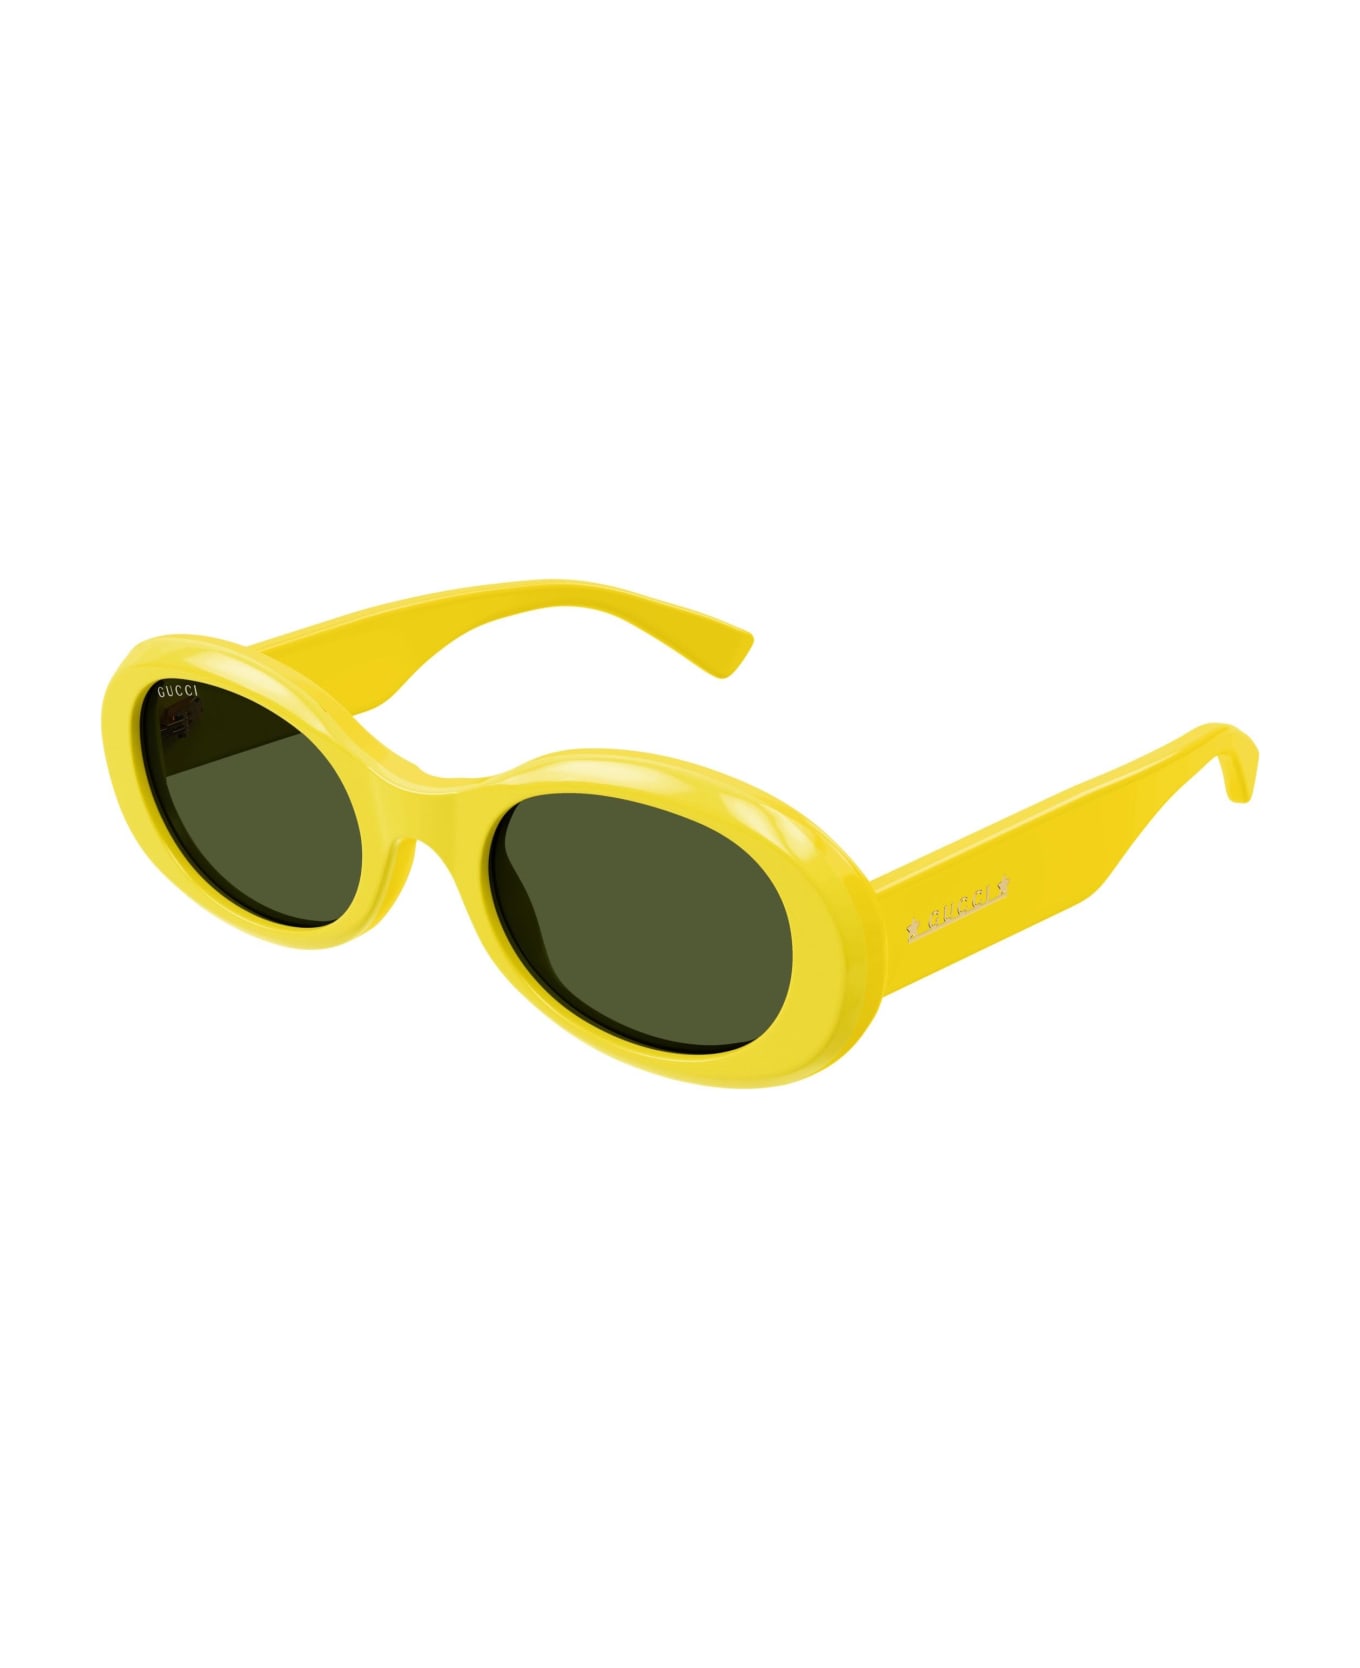 Gucci Eyewear Sunglasses - Giallo/Verde サングラス